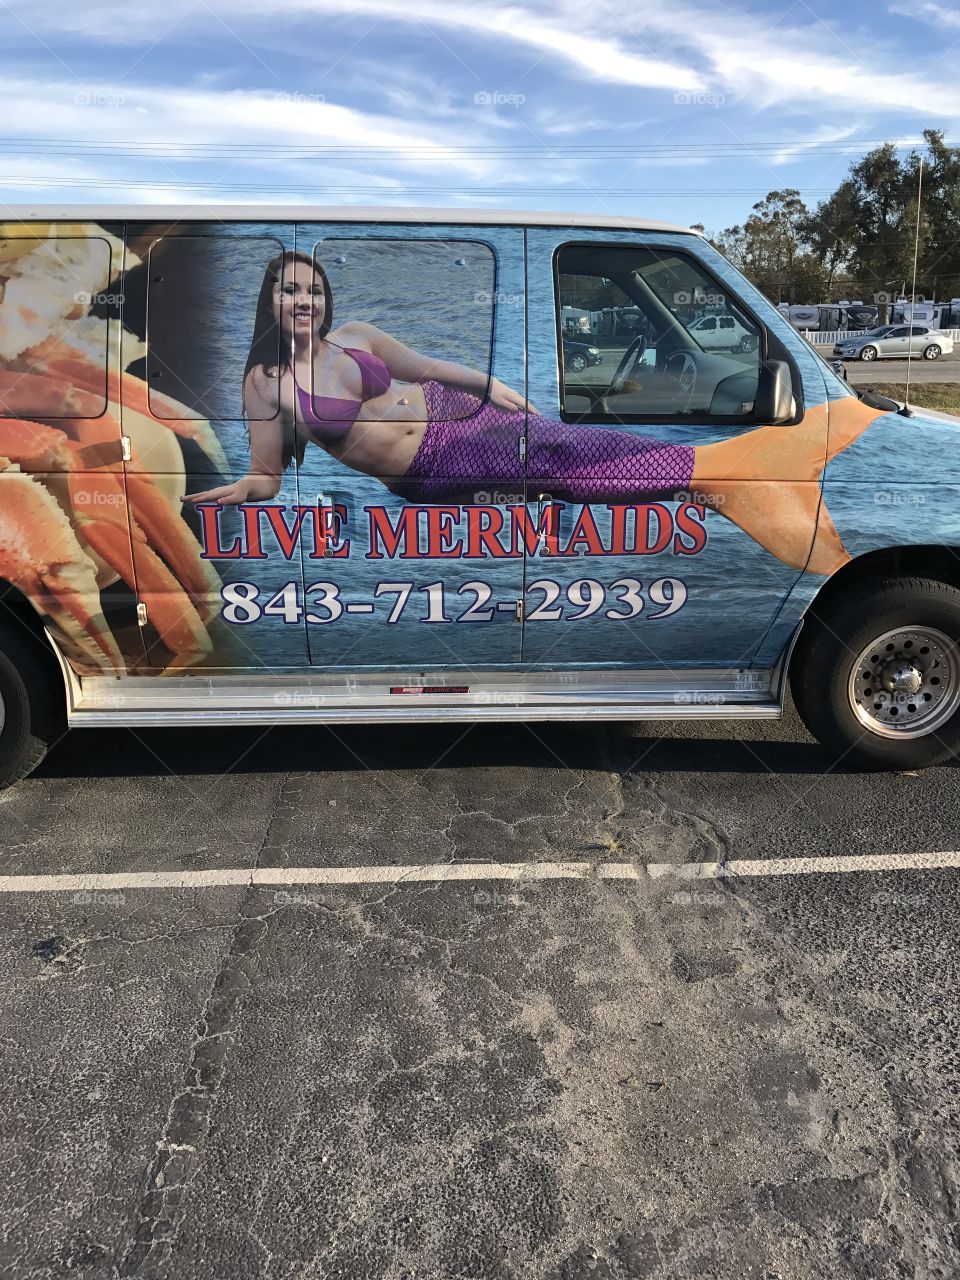 Mermaid Advertising Restaurant 